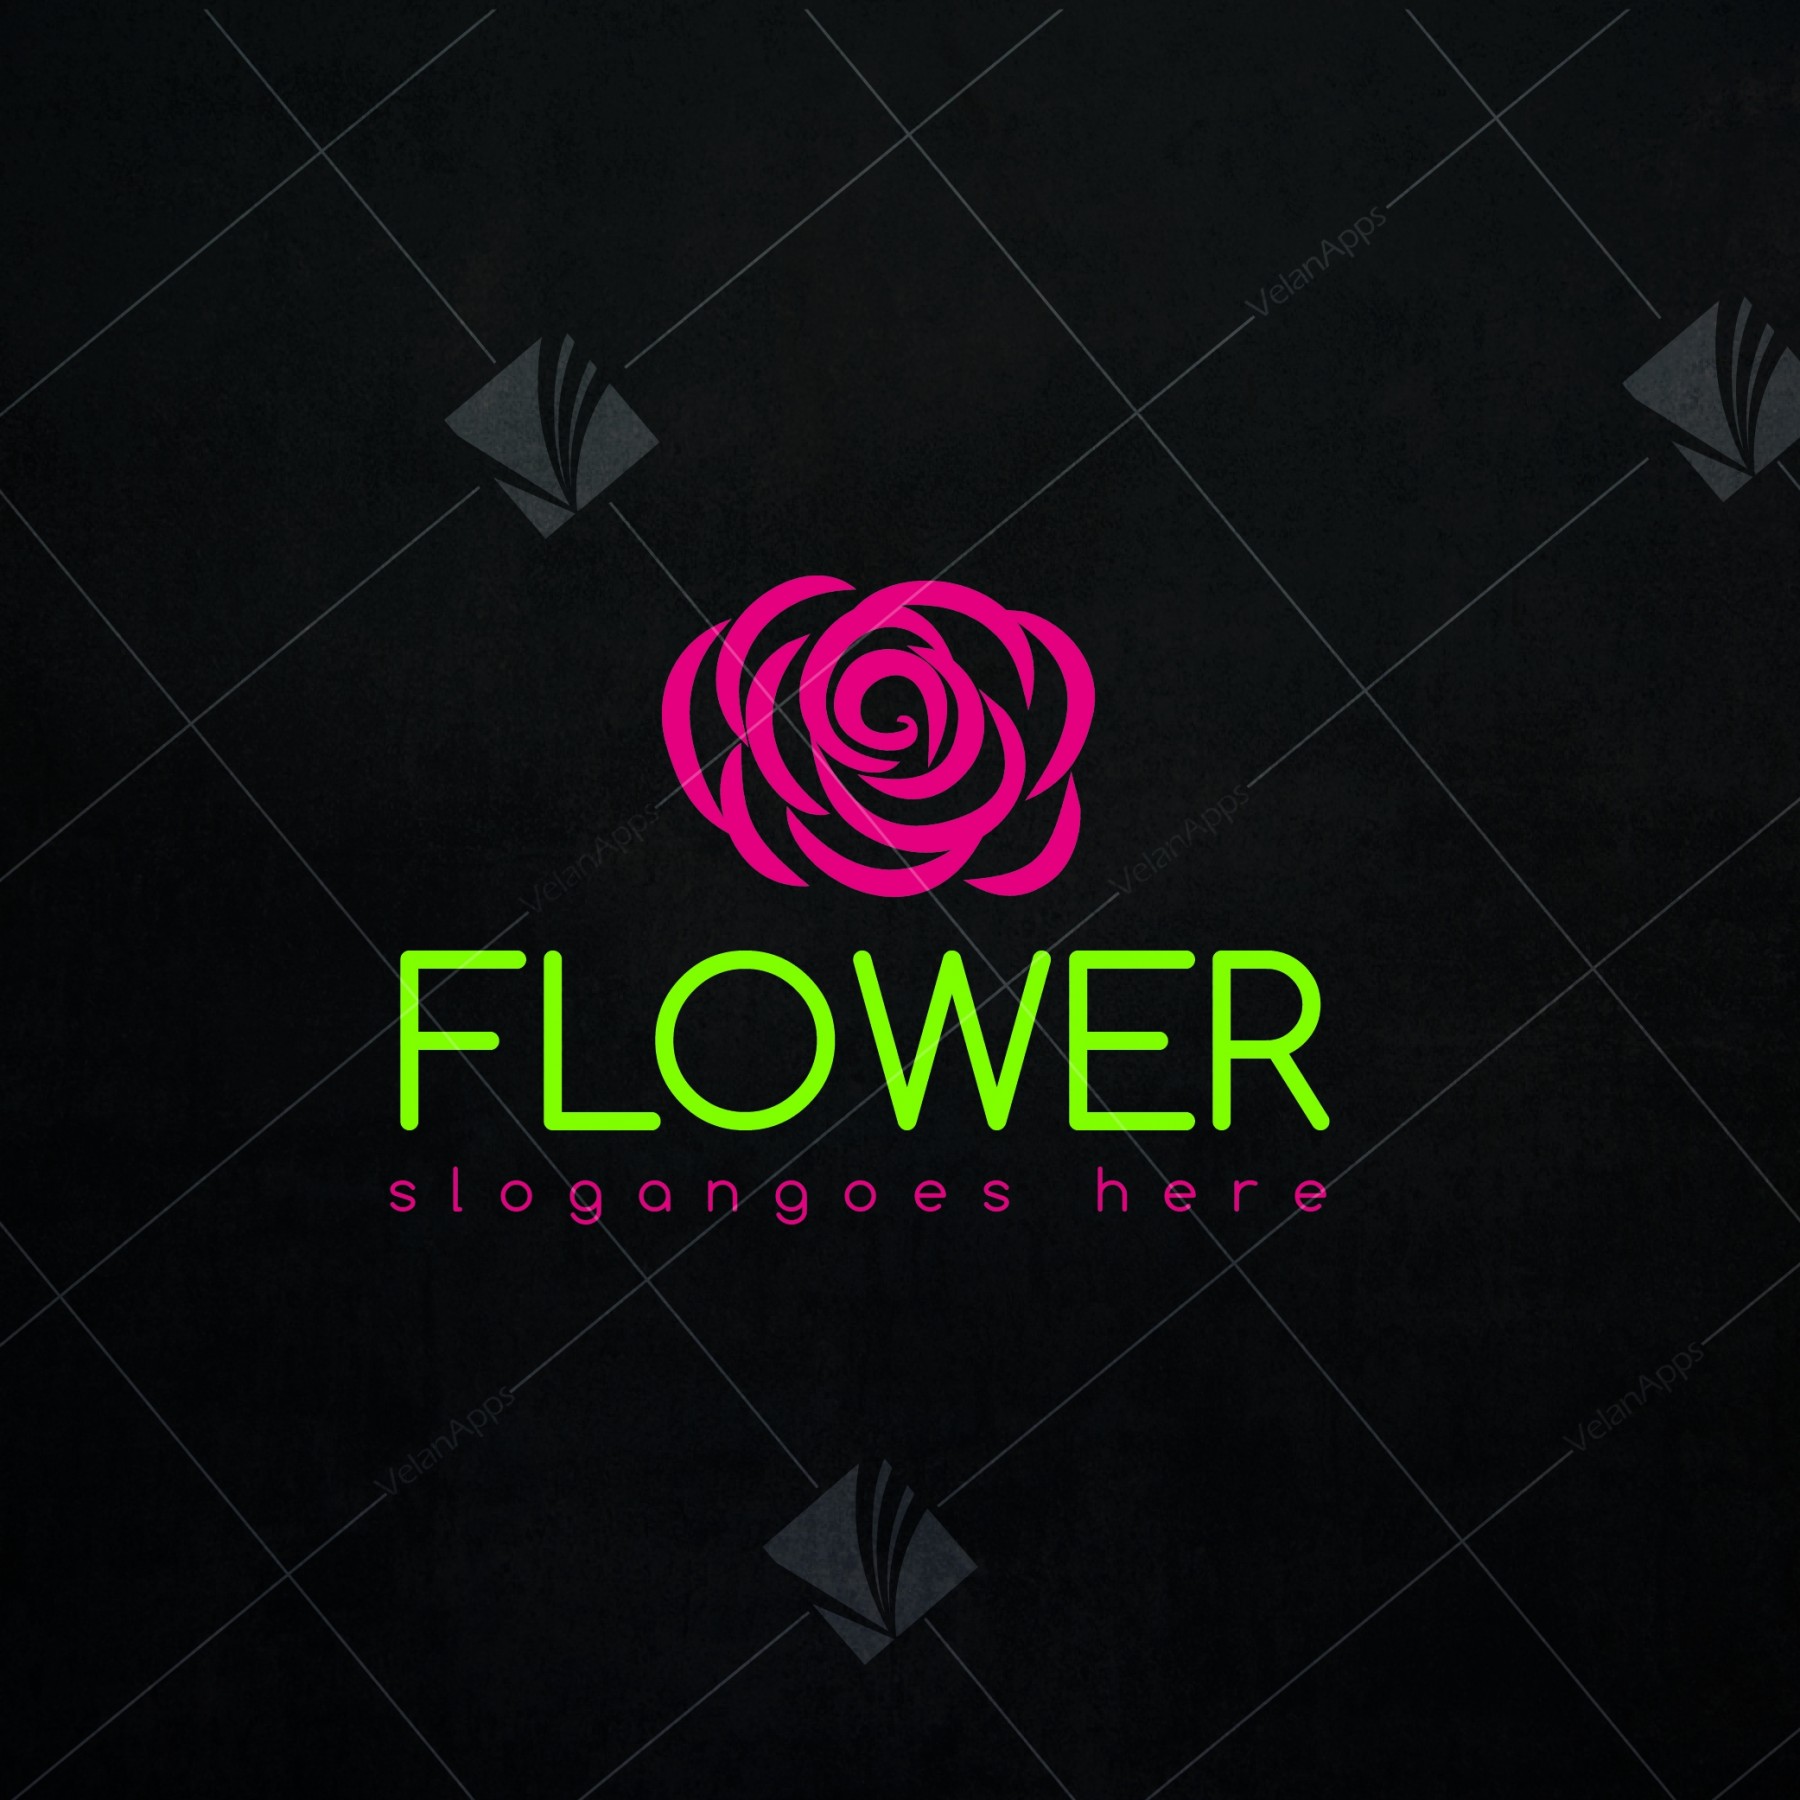 Flower Company Logo